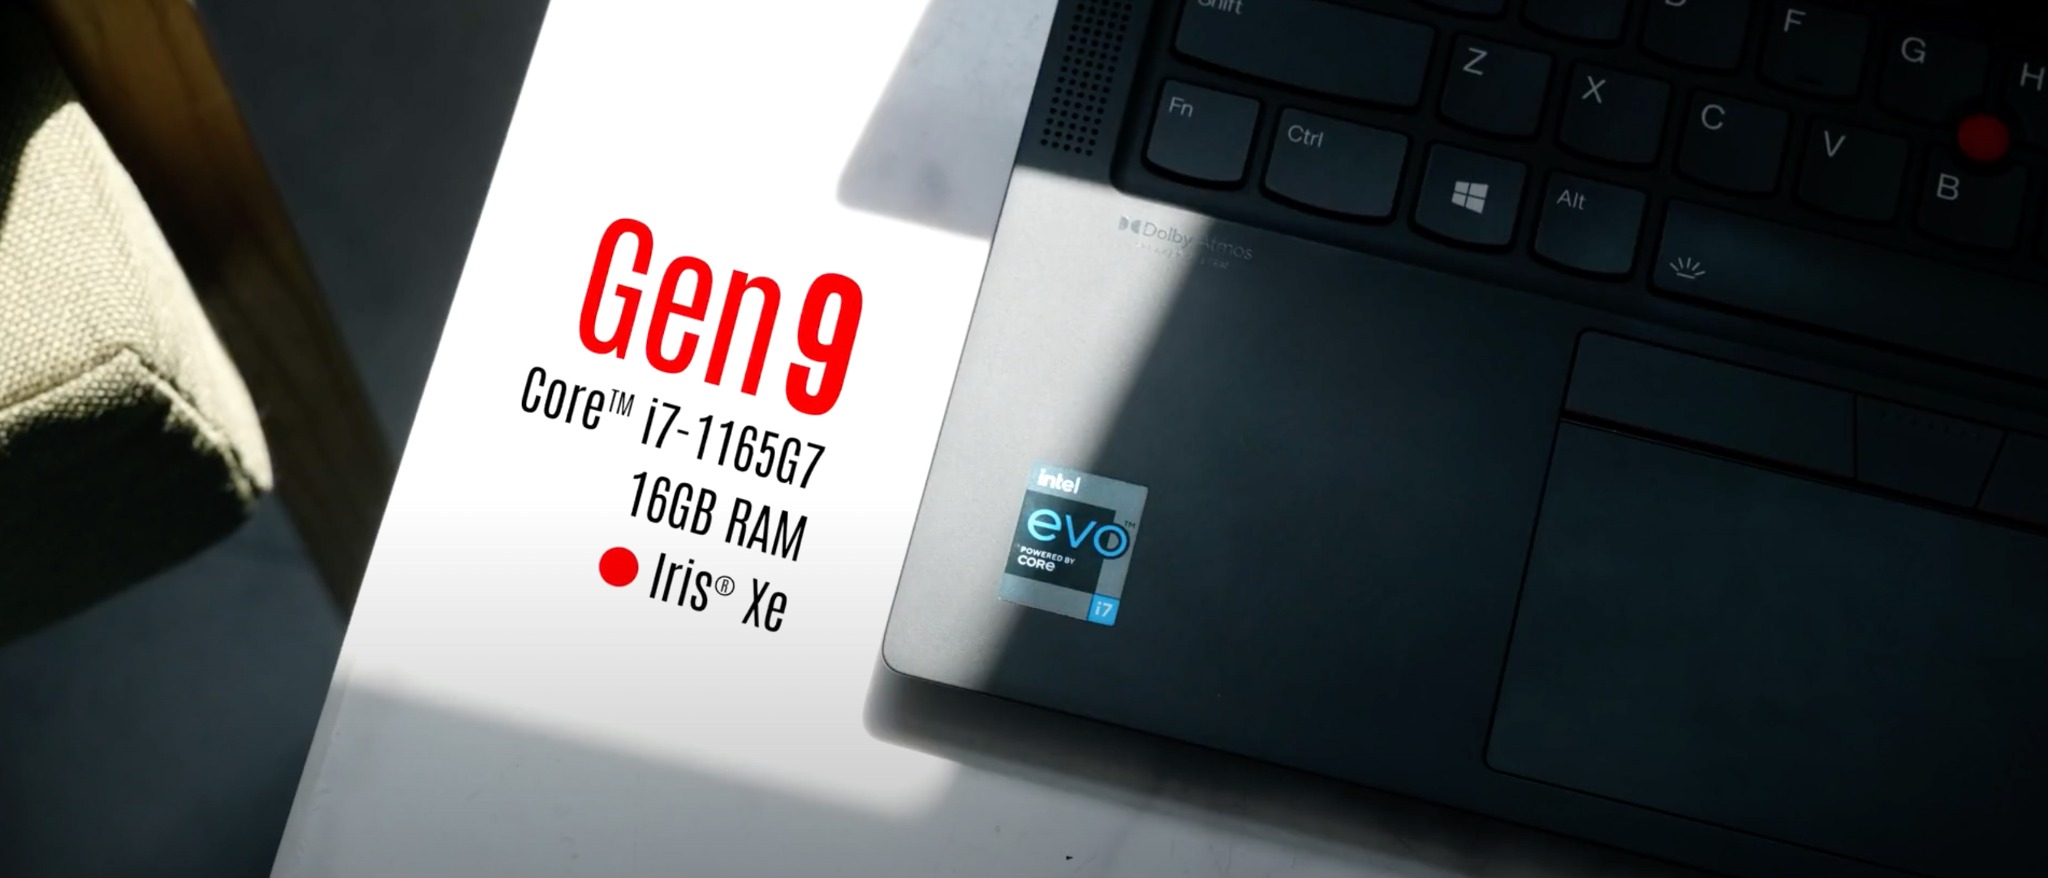 Lenovo Thinkpad X1 Carbon Gen 9 thoi luong pin khung